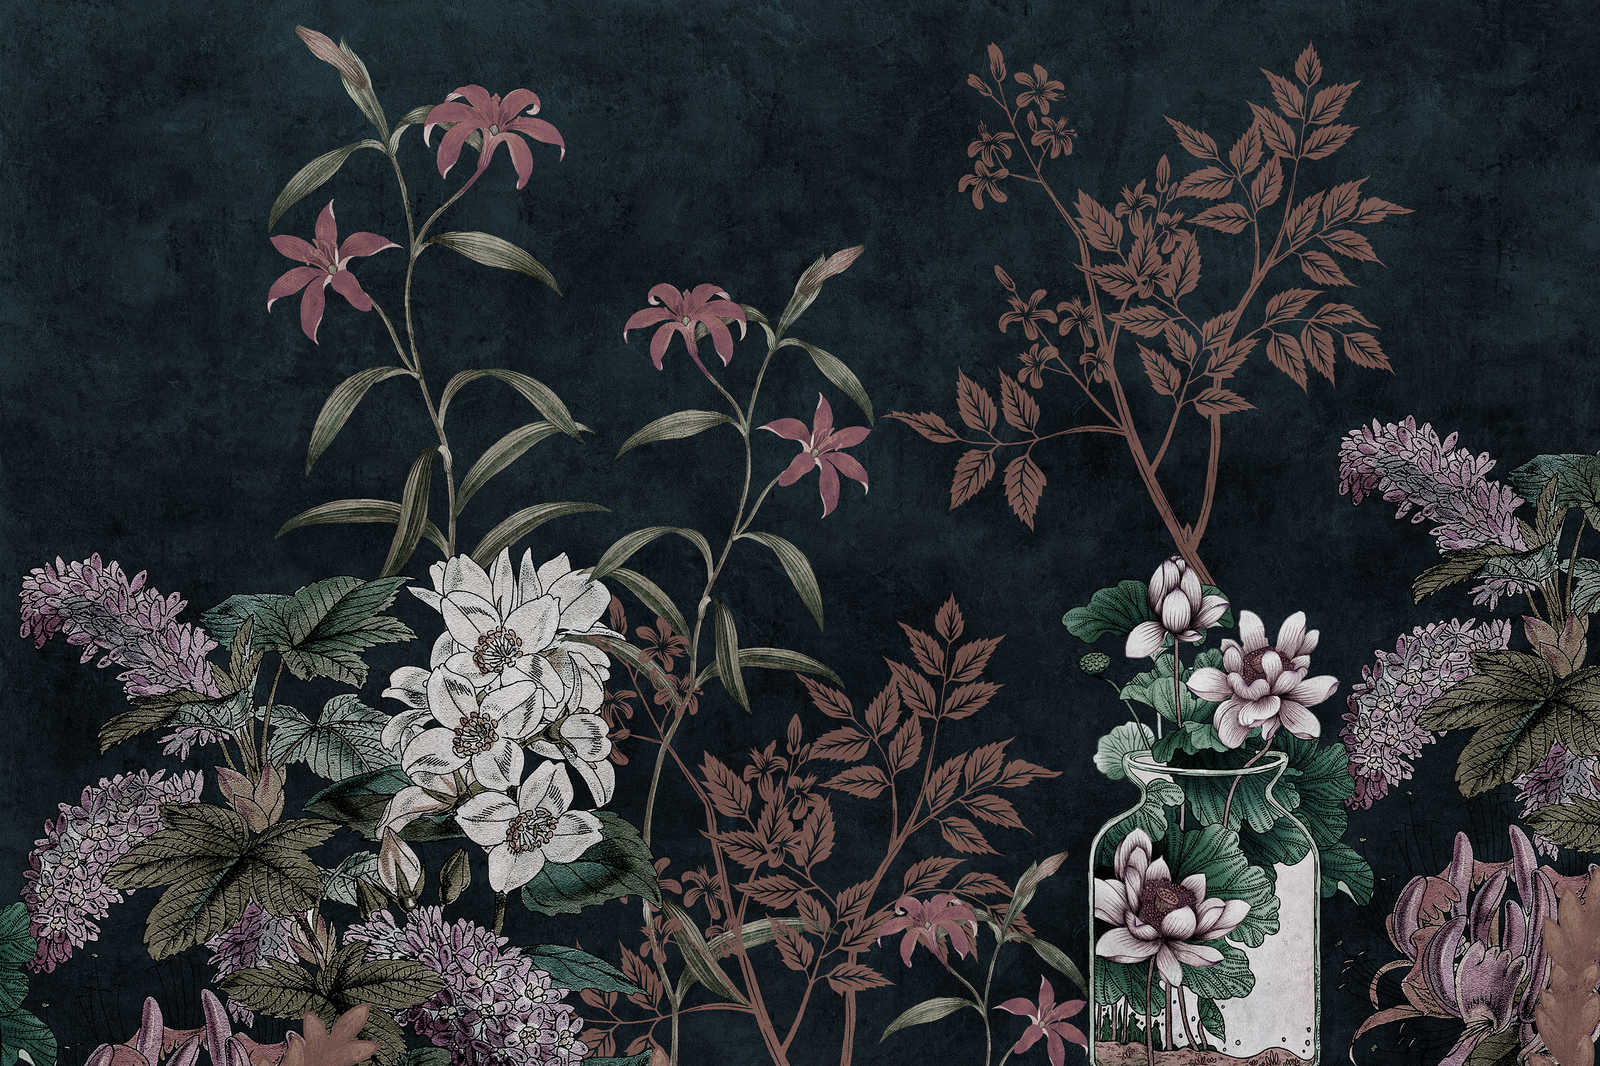             Dark Room 2 - Schwarzes Leinwandbild Botanical Muster Rosa – 1,20 m x 0,80 m
        